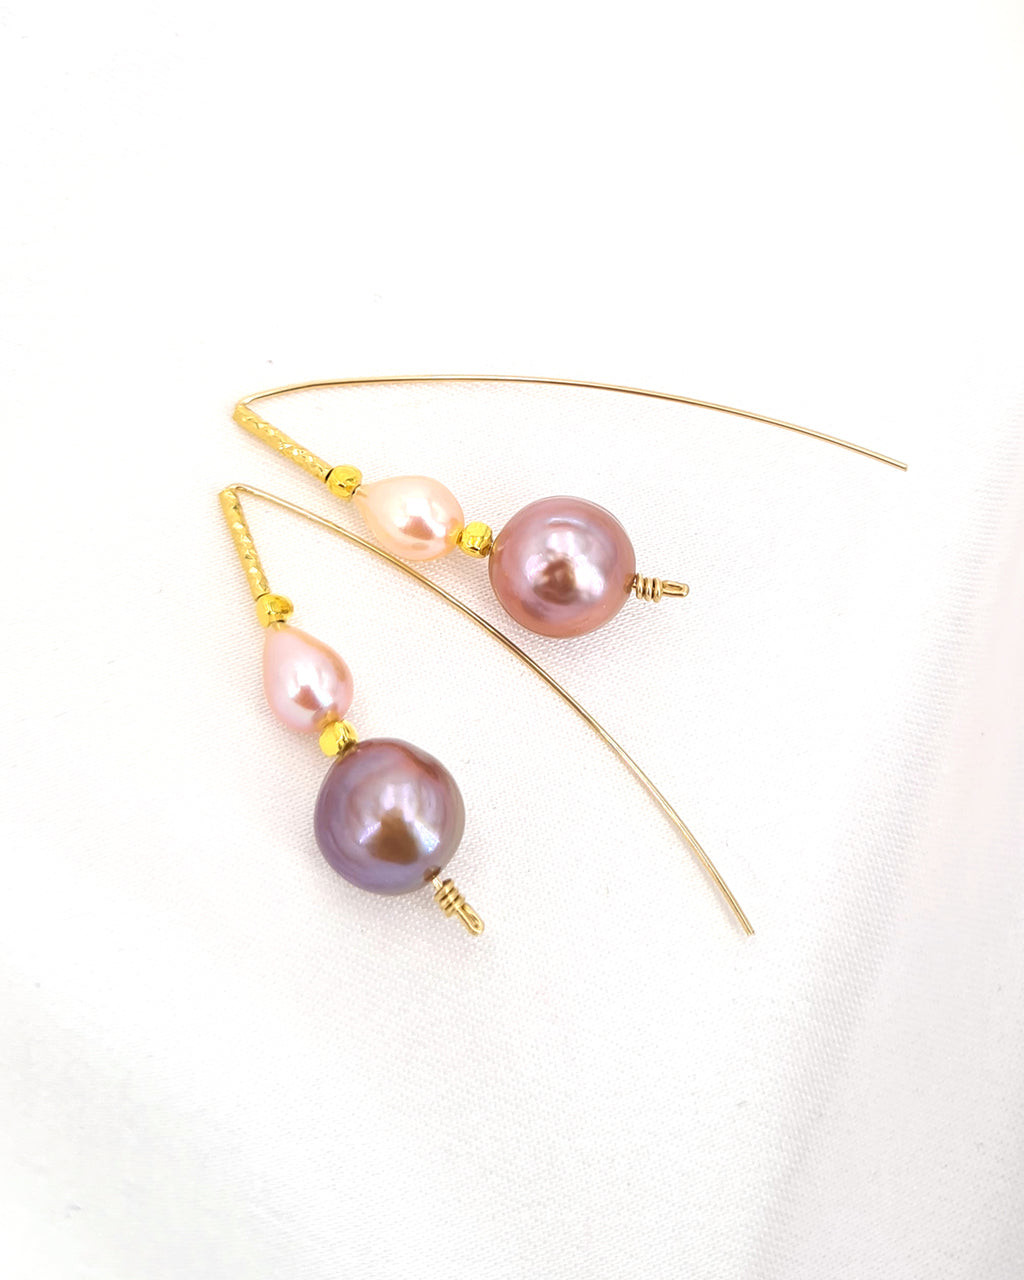 Pearl Earrings - Golden Peach and Purple Freshwater Pearl Earrings | Handmade in Singapore